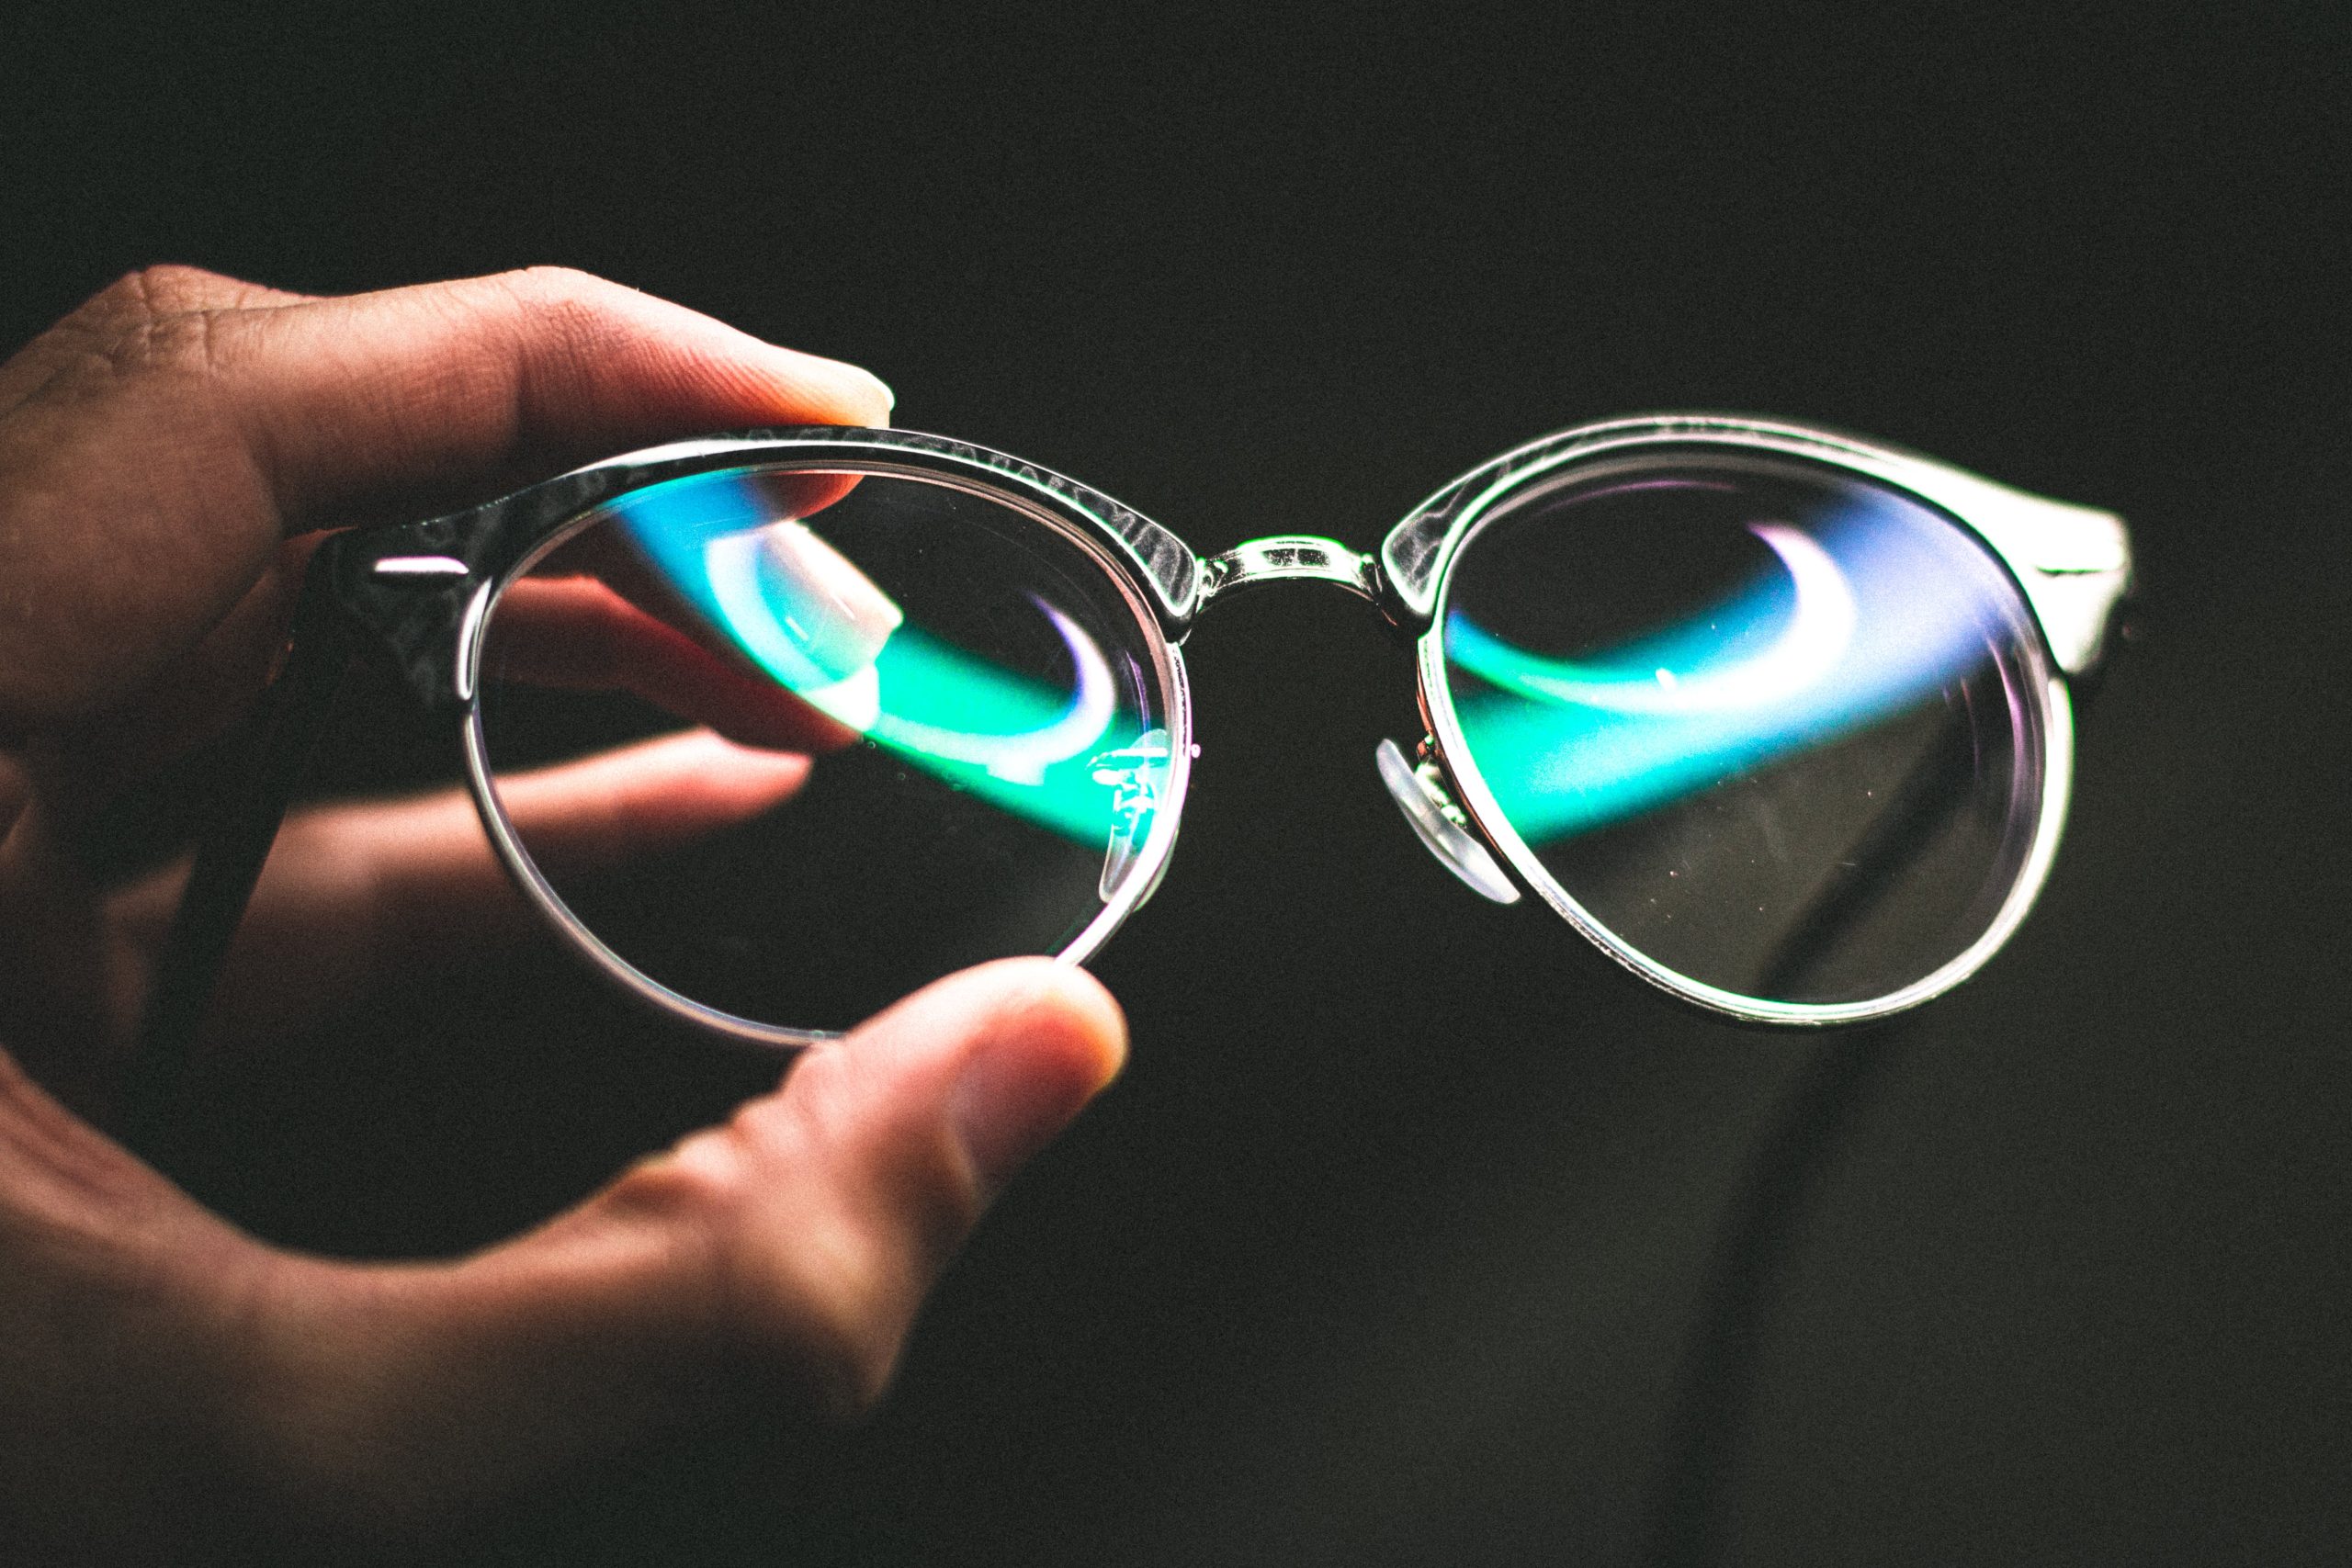 eyeglasses with lens coating